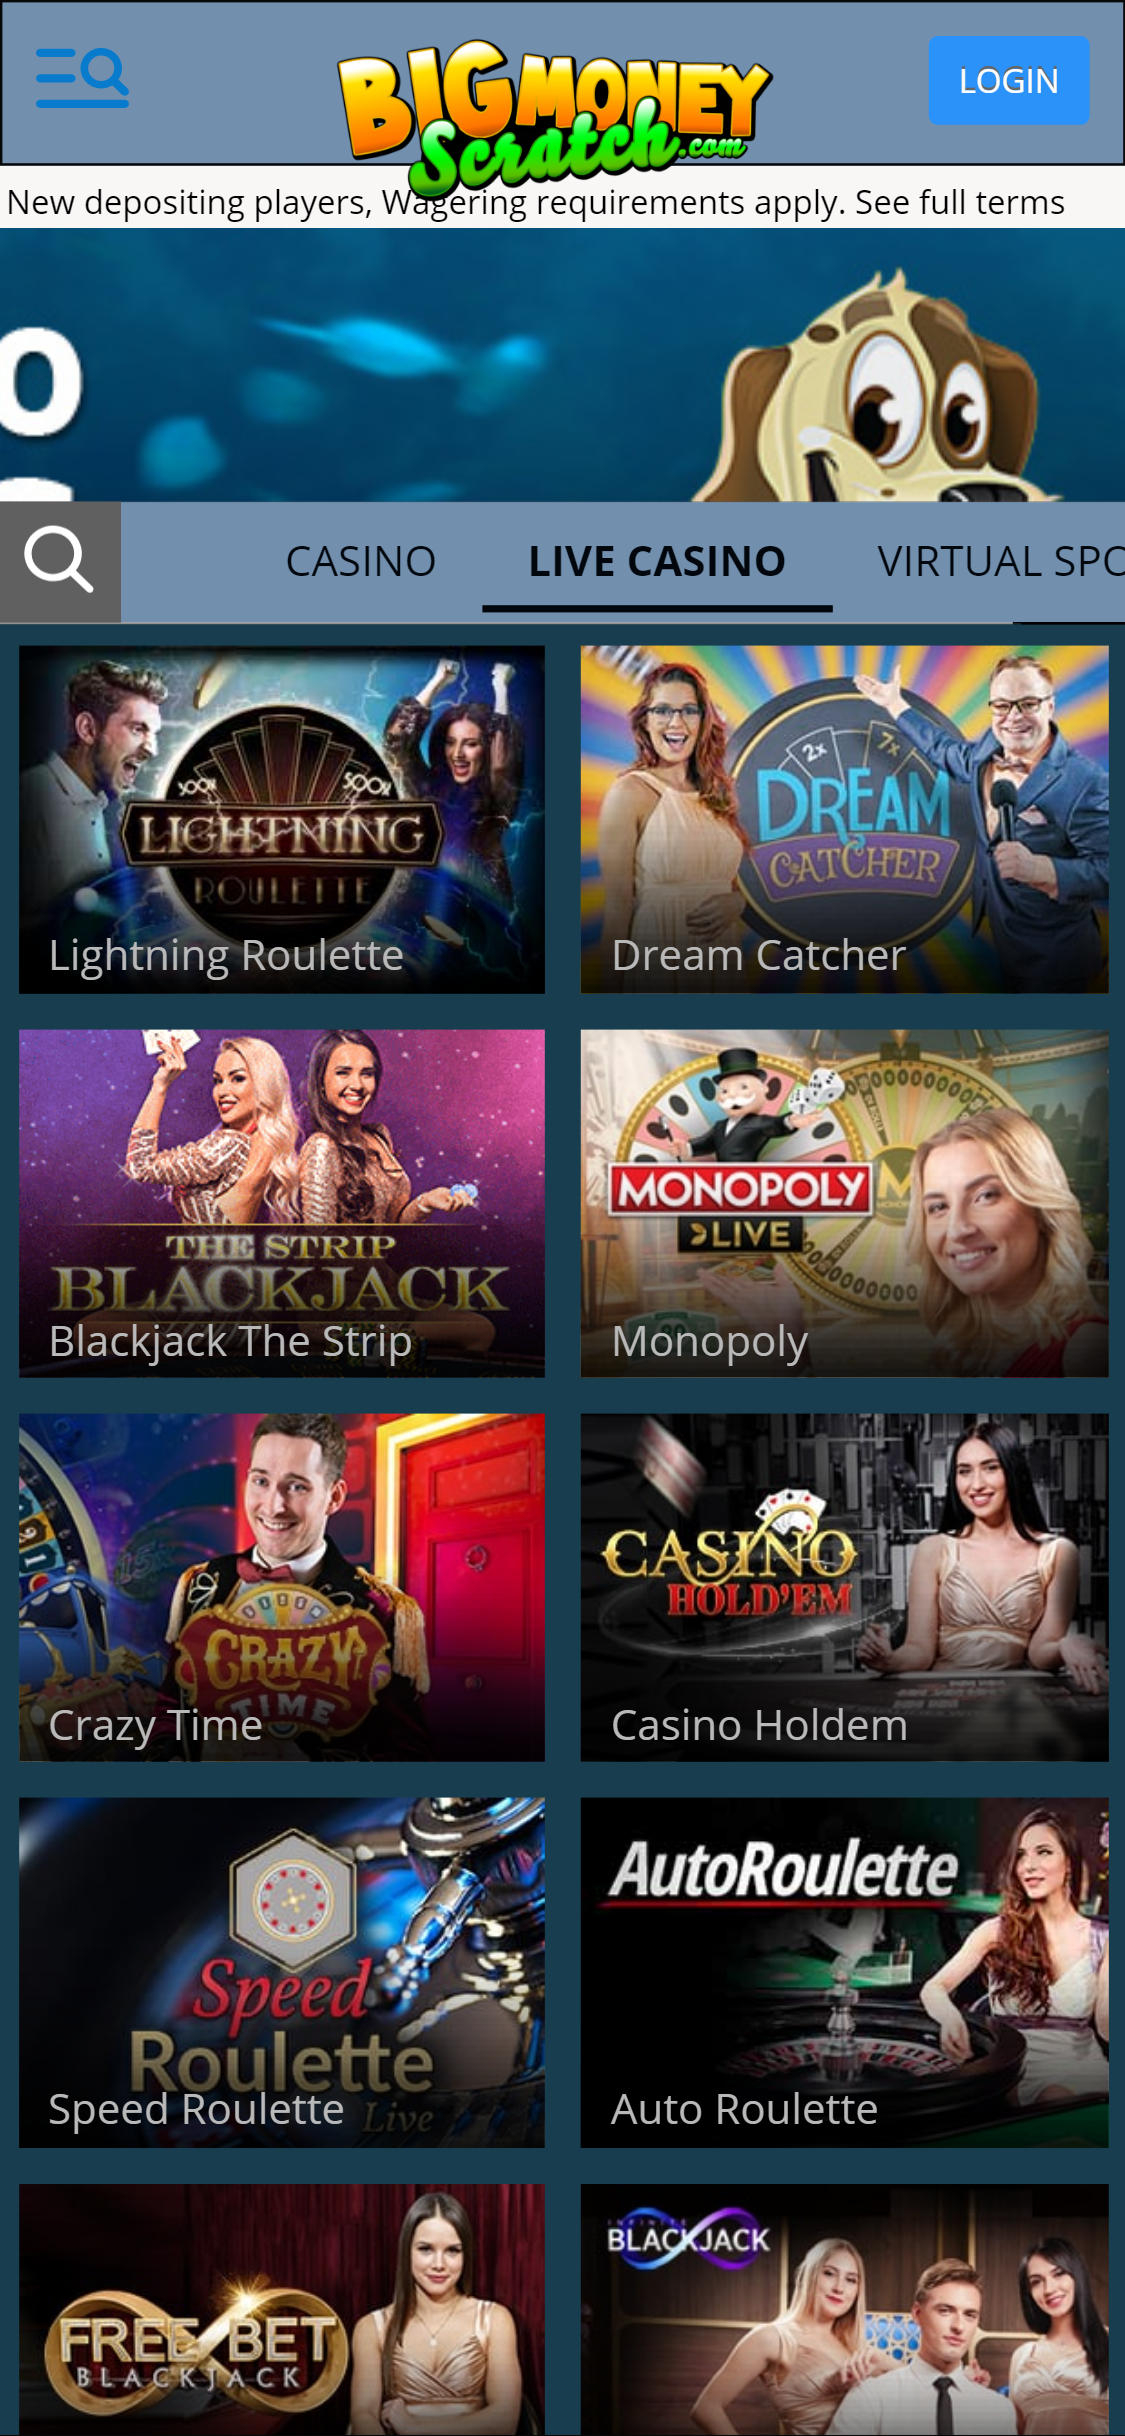 Big Money Scratch Casino Mobile Live Dealer Games Review